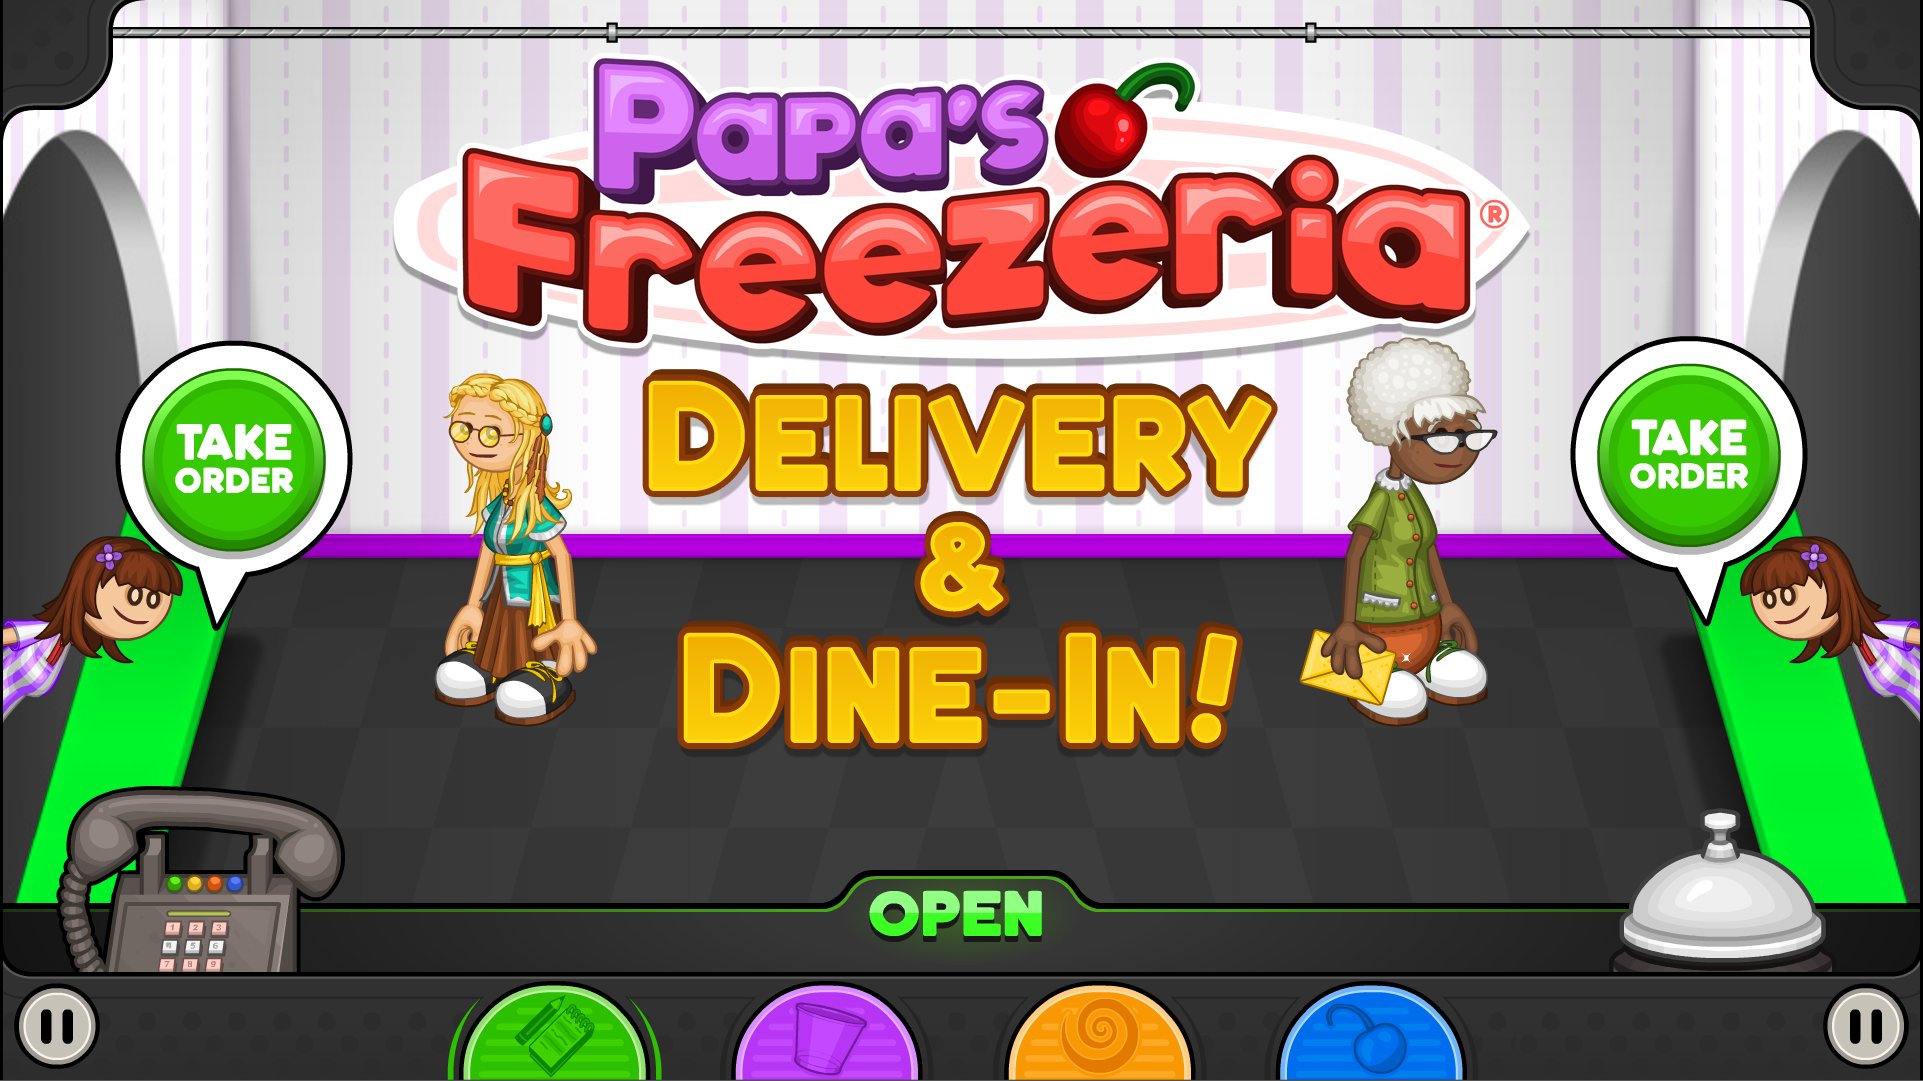 Papa's freezeria : Flipline Studios : Free Download, Borrow, and